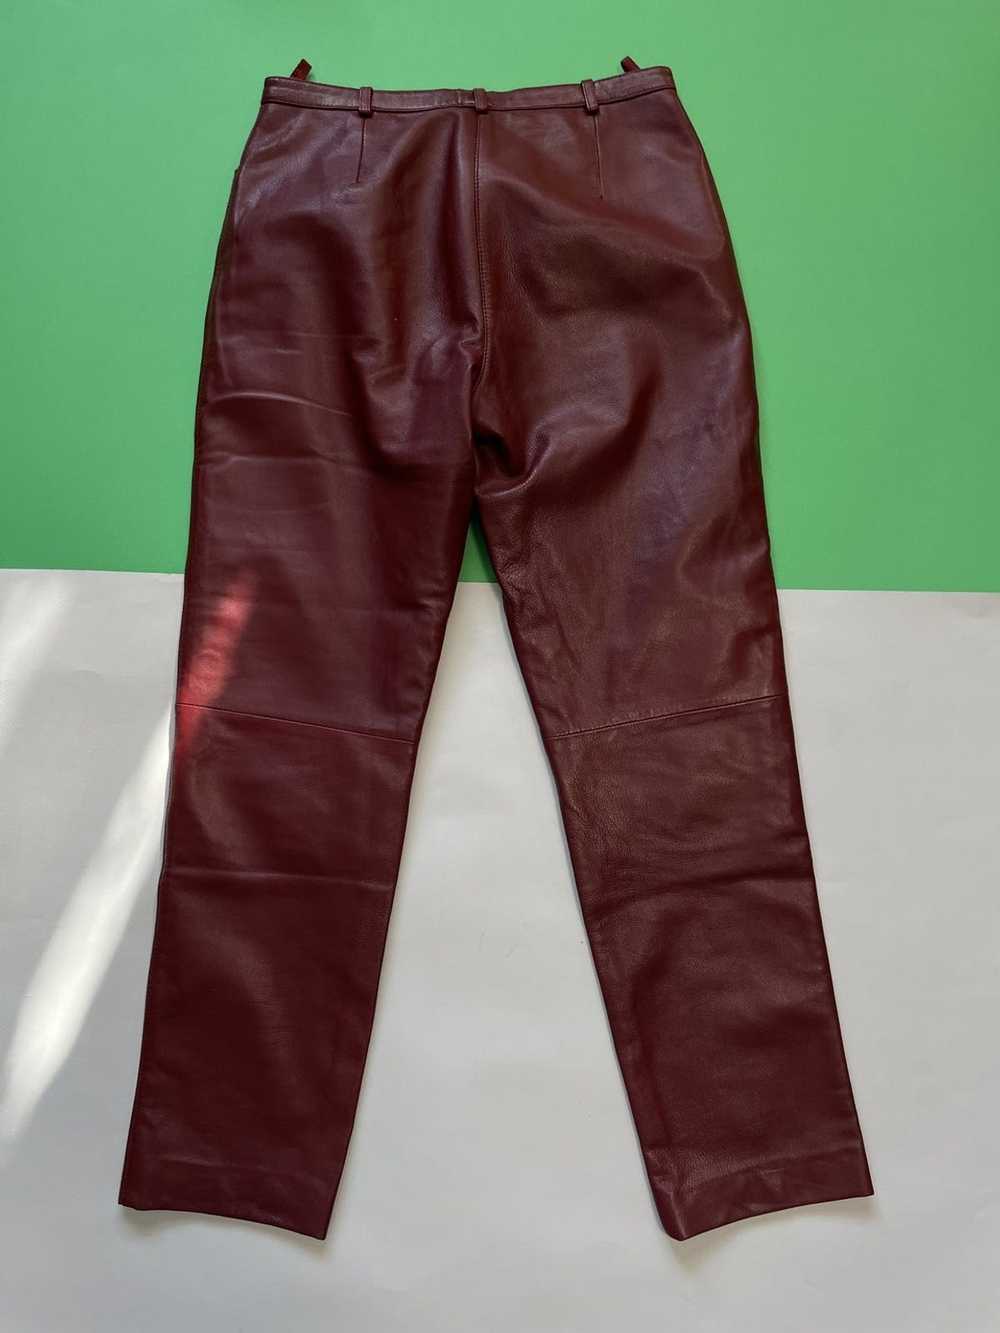 Japanese Brand × Vintage Genuine Leather Pants - image 10